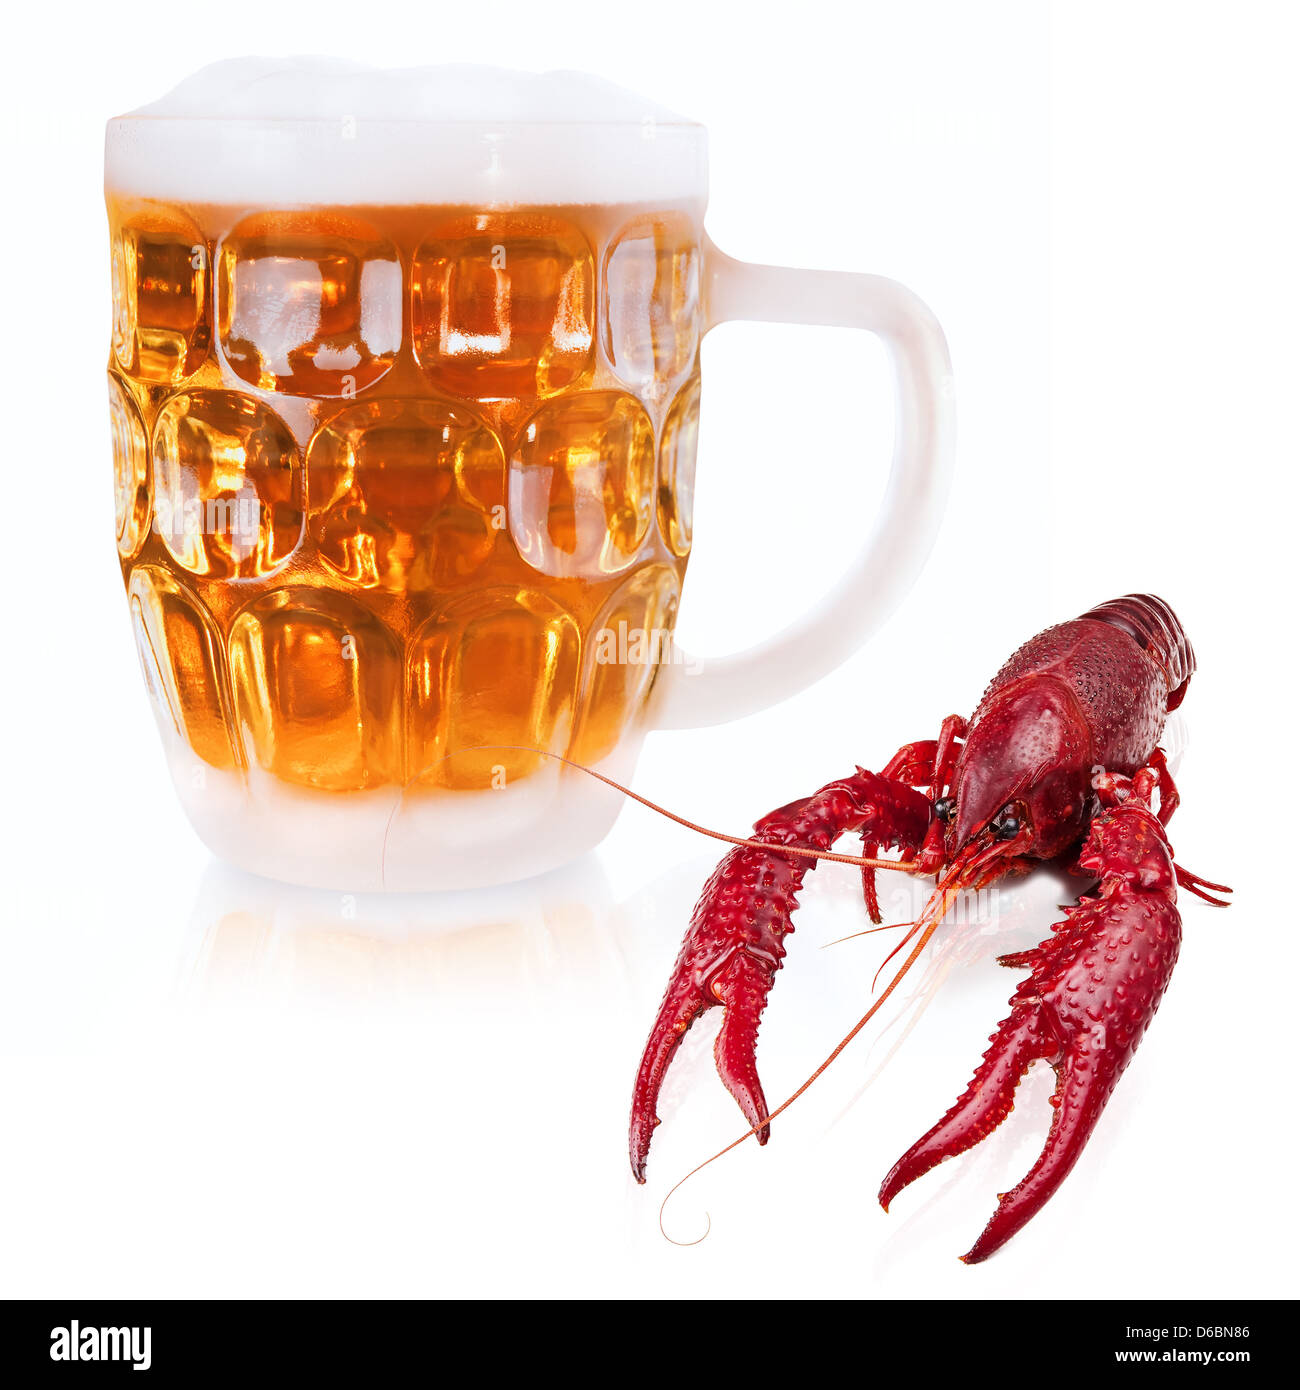 crawfish and beer Stock Photo